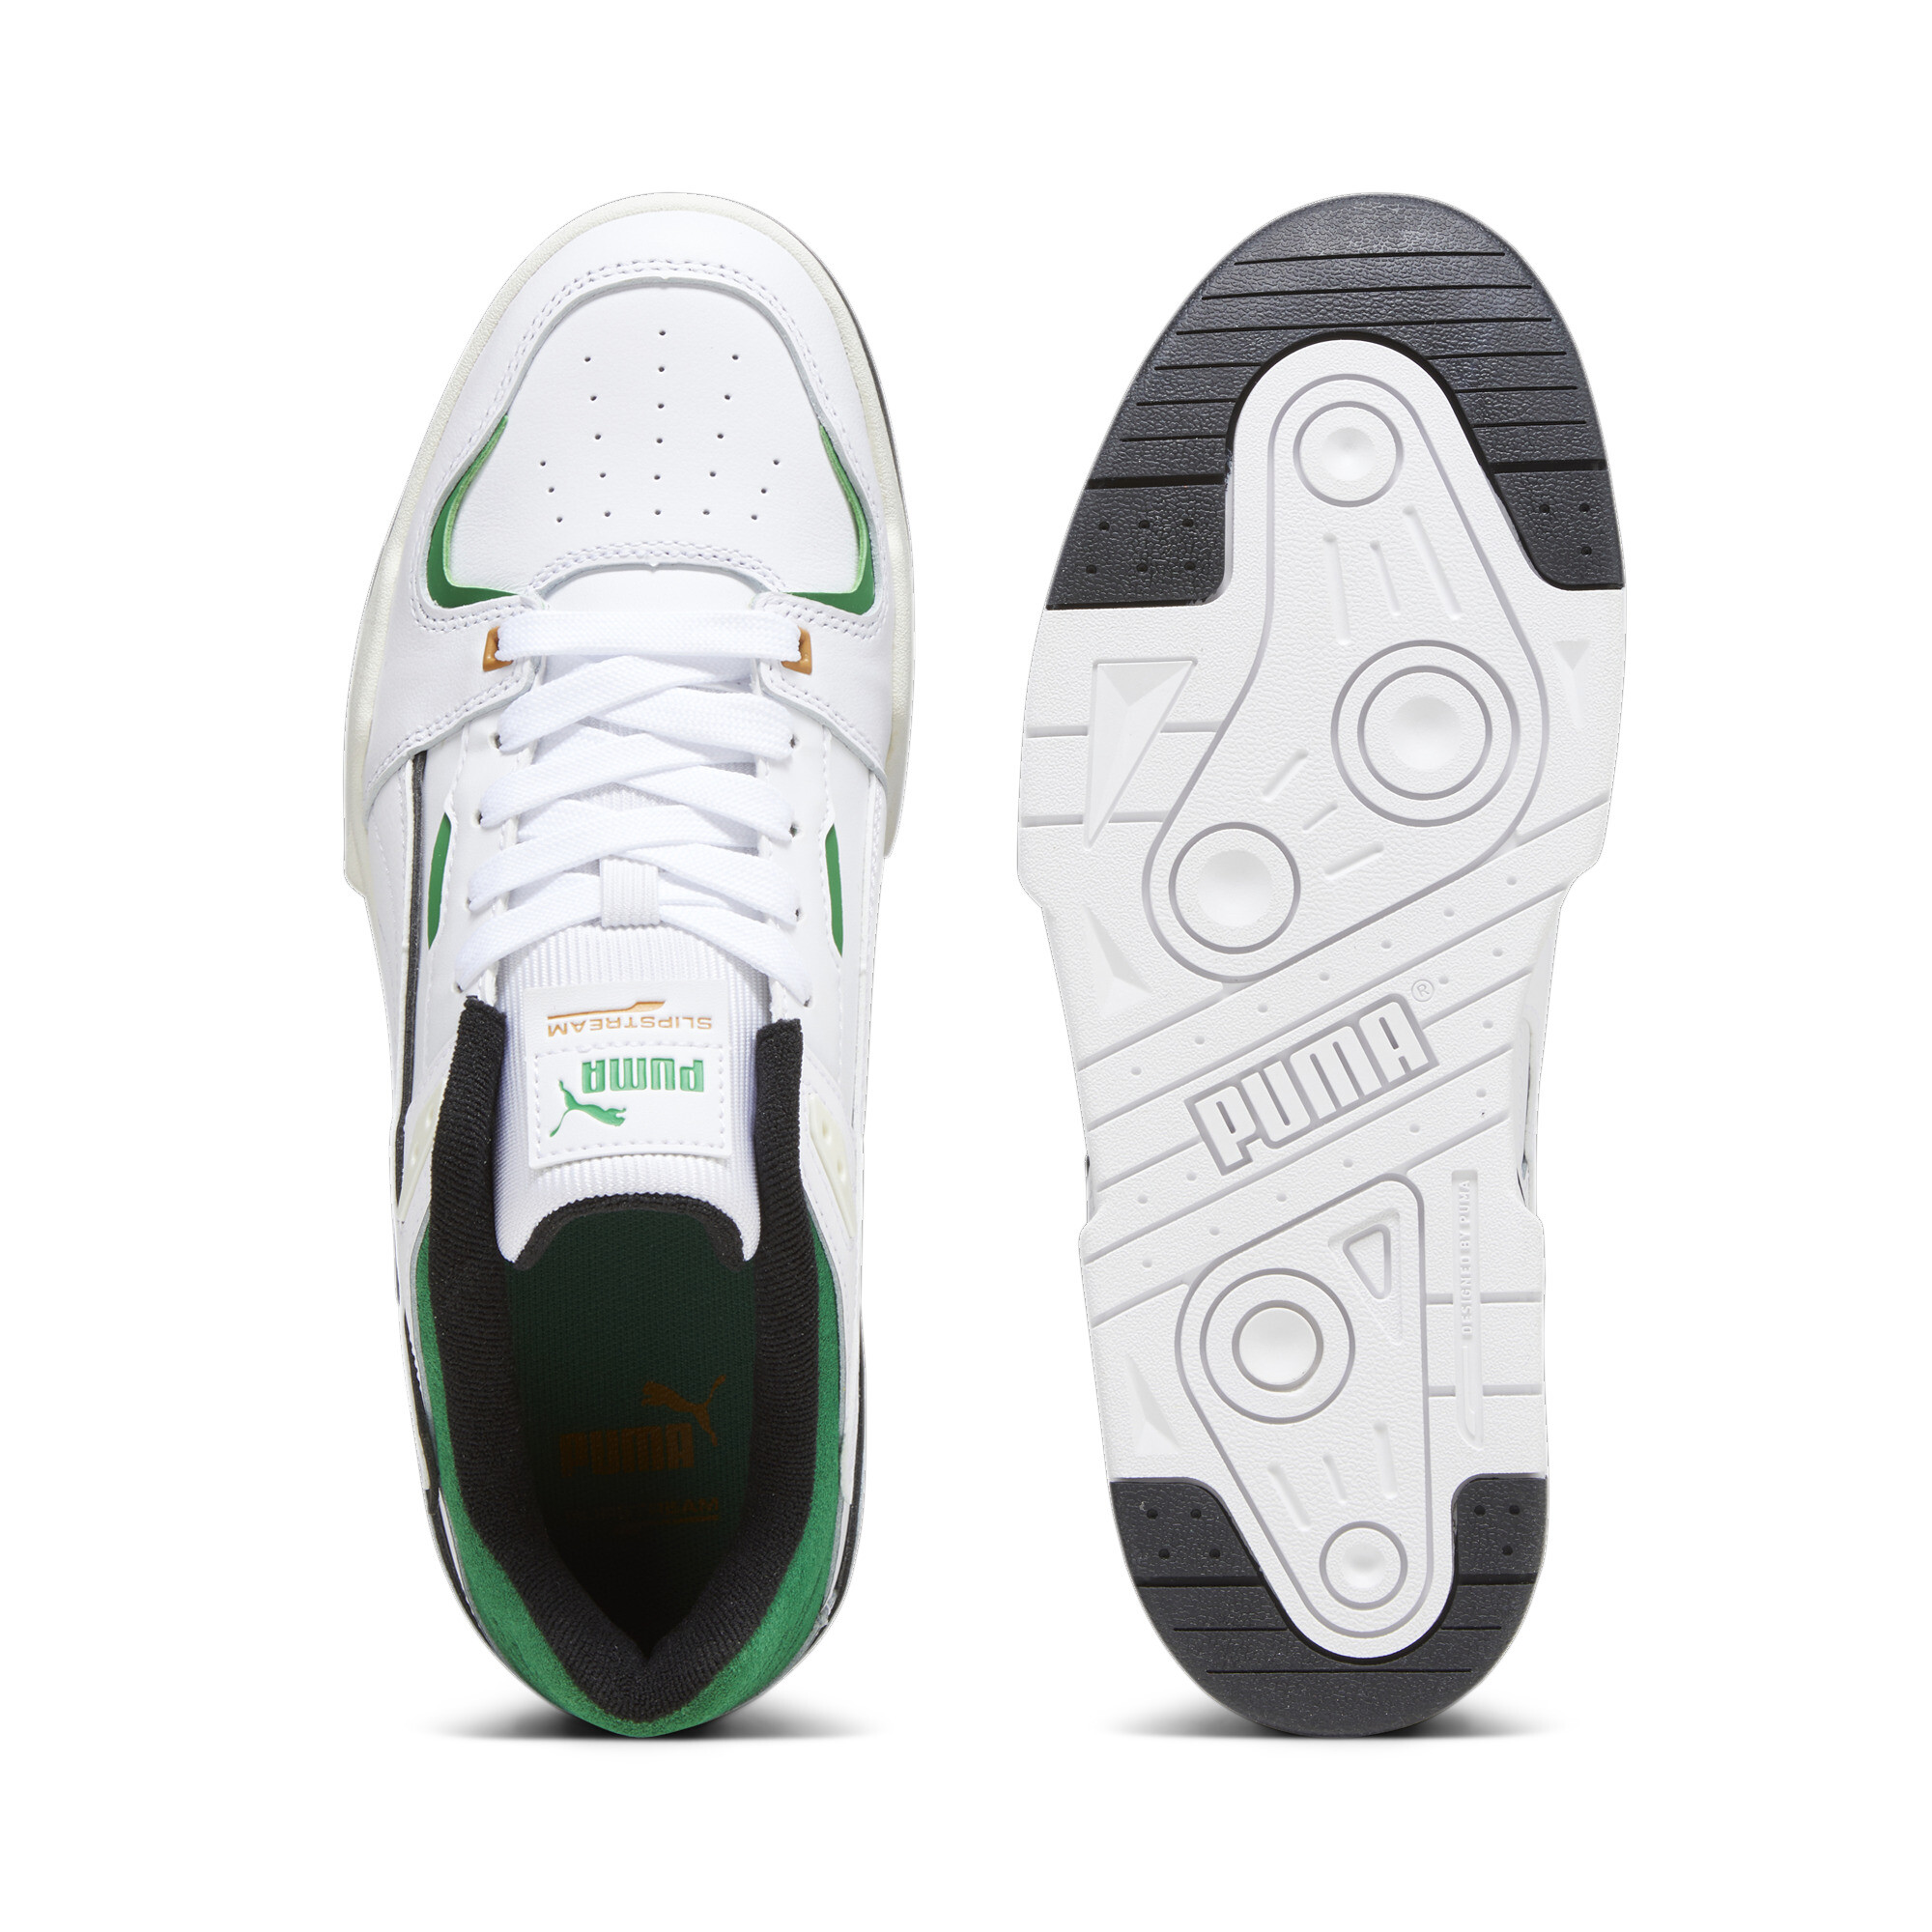 Men's PUMA Slipstream Bball Sneakers In White, Size EU 44